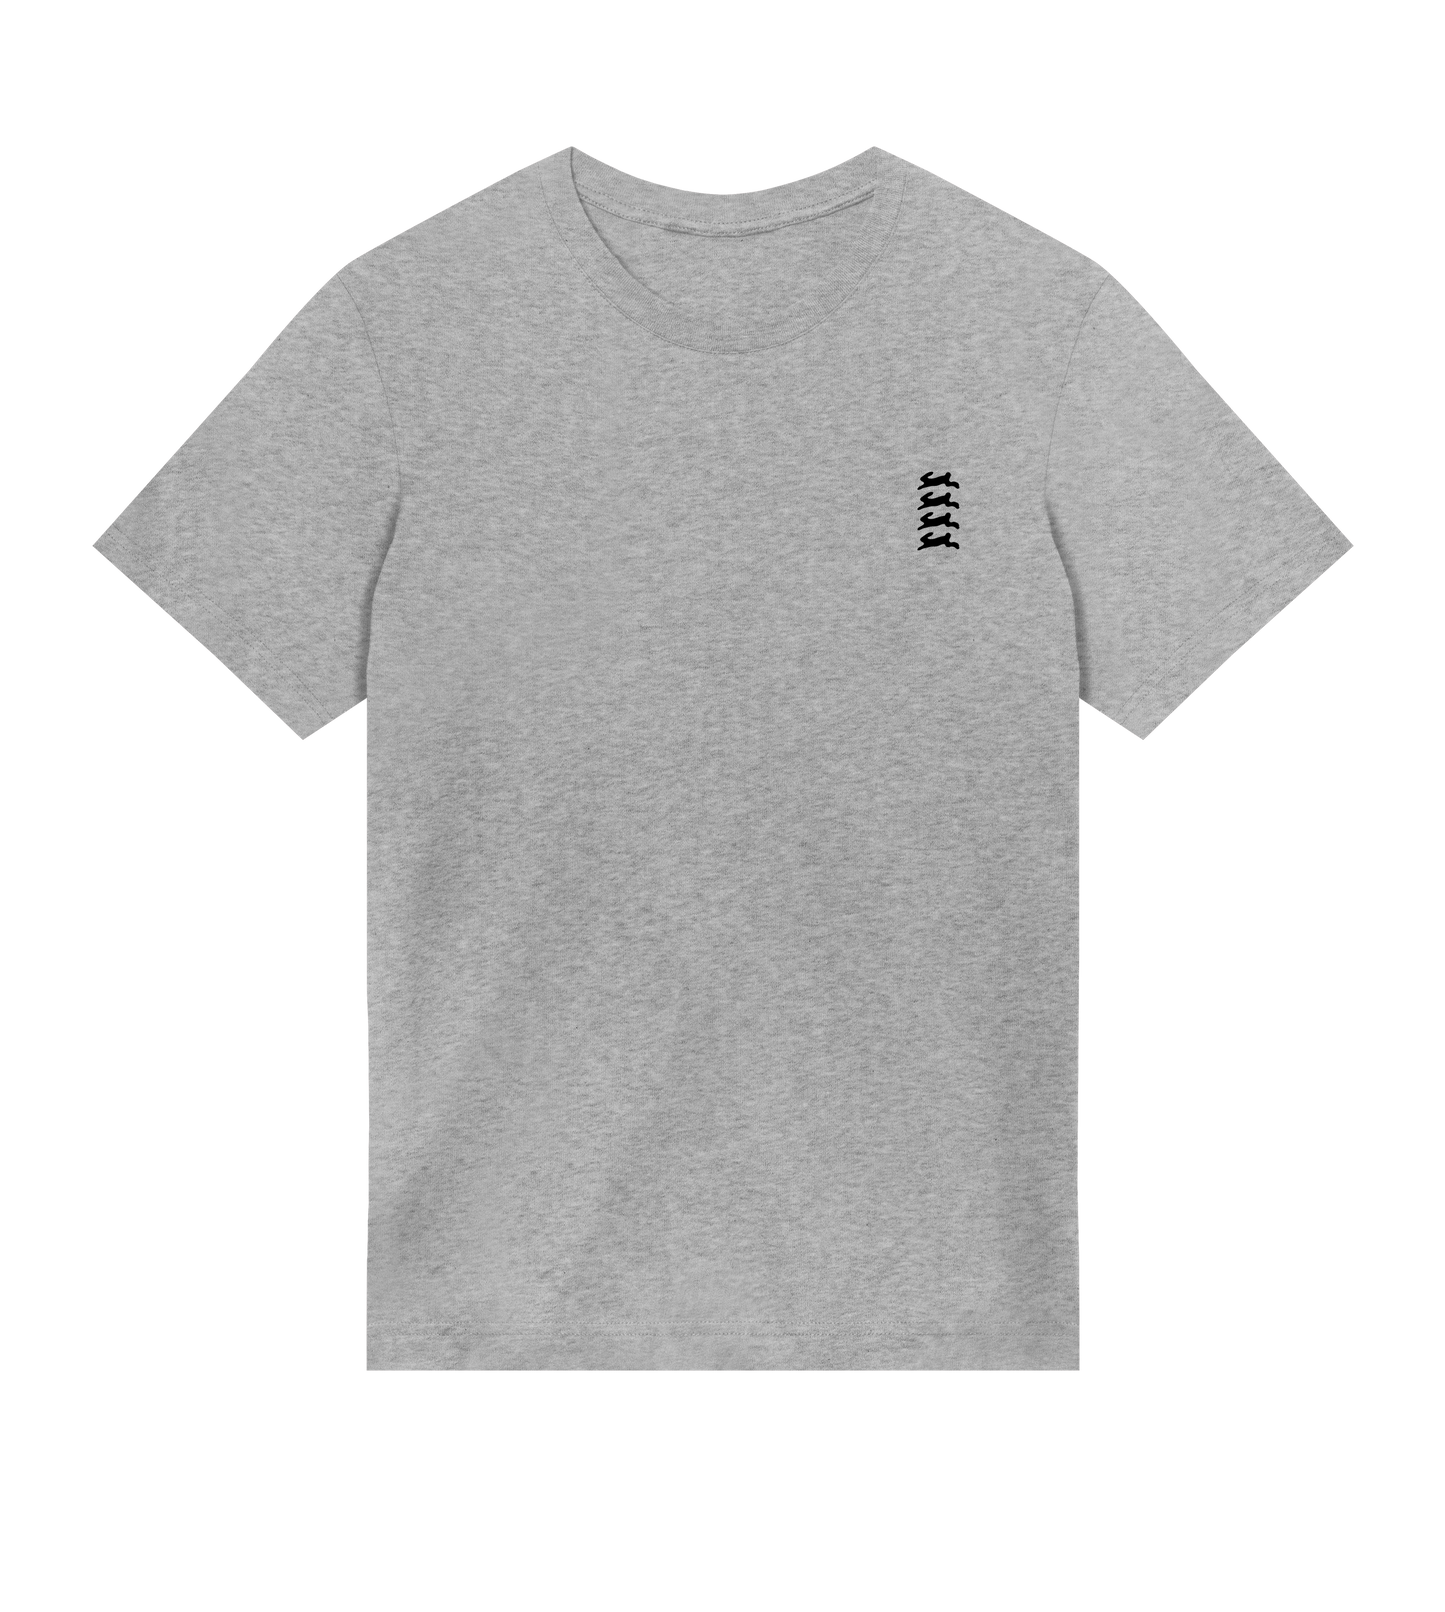 comeherefloyd parallelogram MAX prime (regular) tshirt - men - gray melange